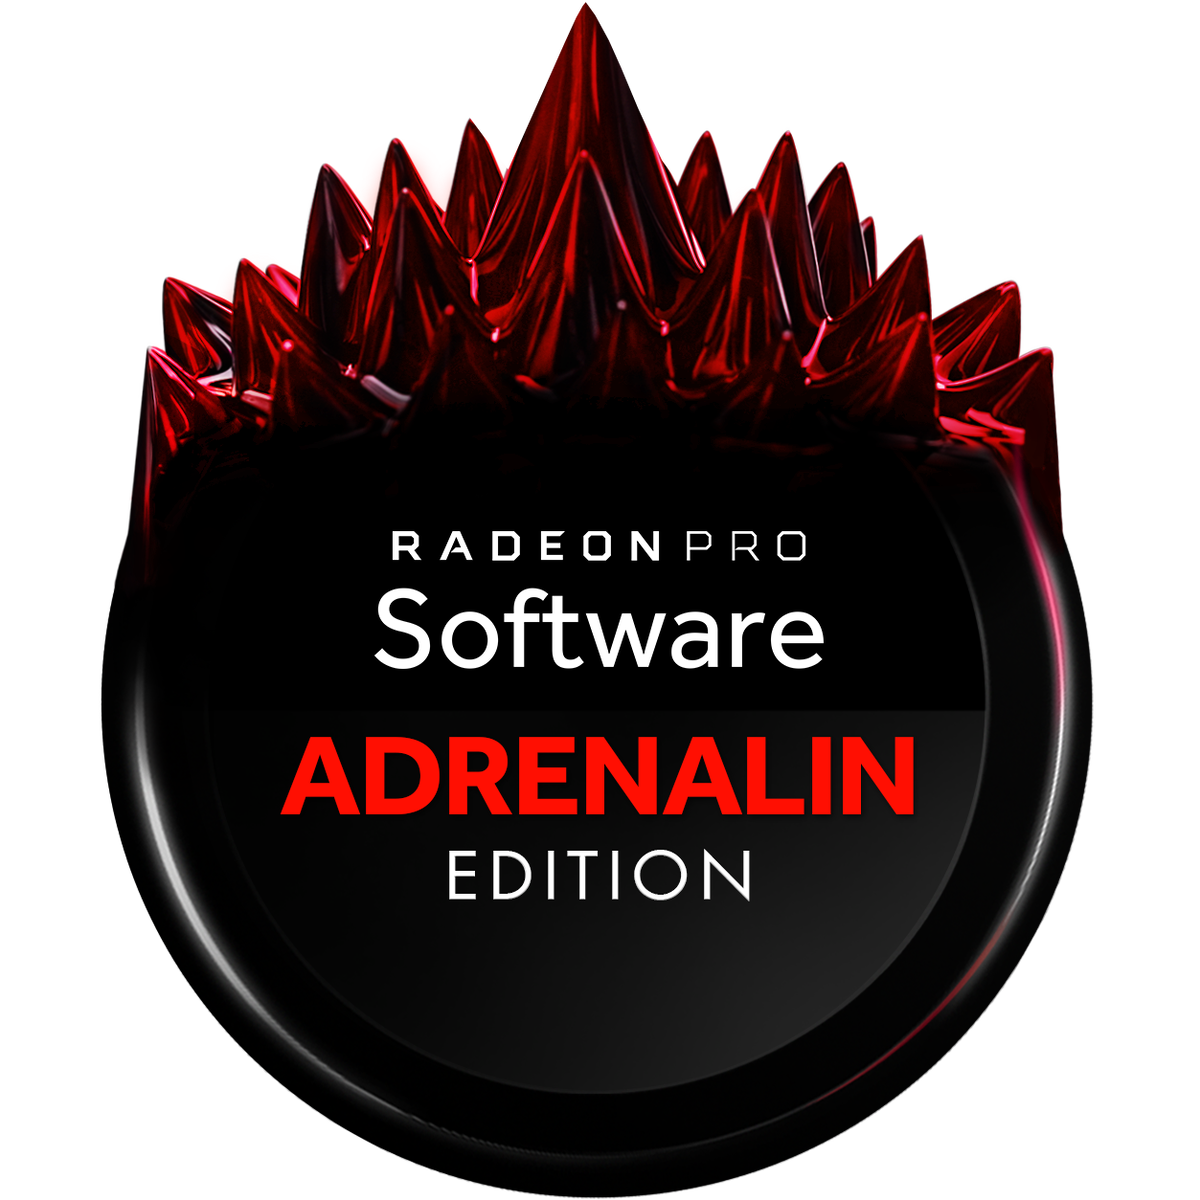 Radeon Adrenalin 2021 Edition. AMD Adrenalin Edition. AMD Radeon Adrenalin Edition. Adrenalin software. Adrenalin edition версии